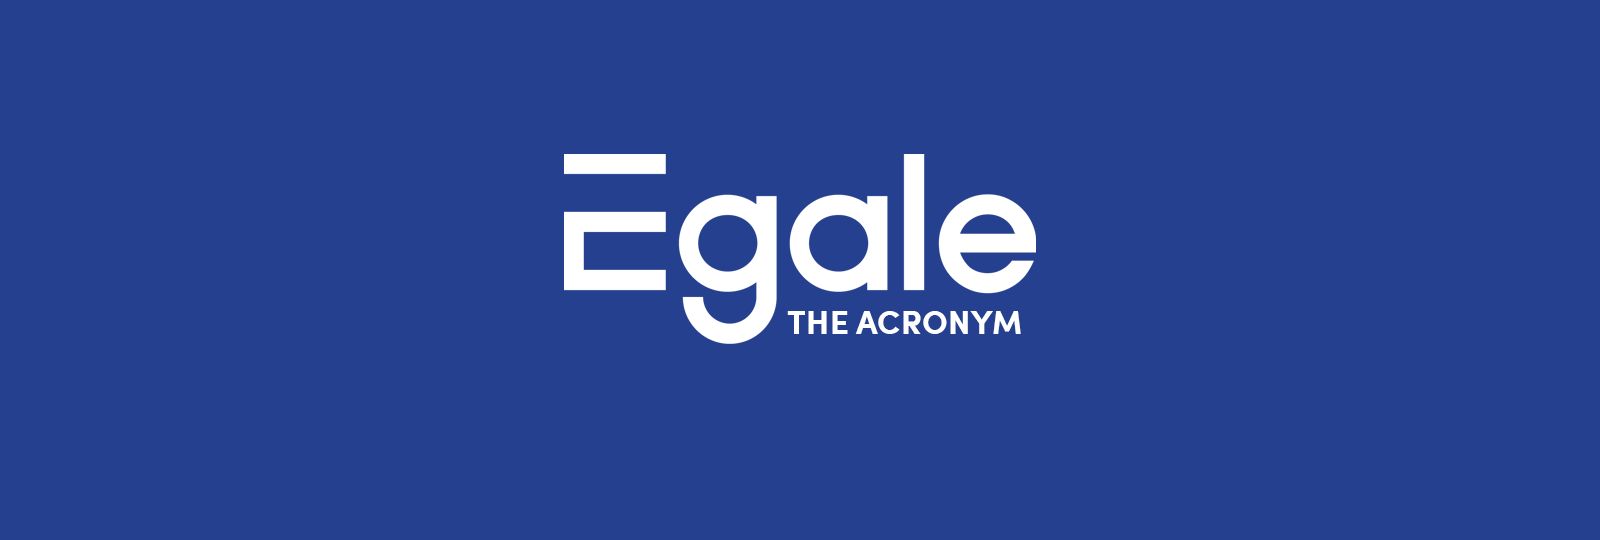 Egale: The Acyonym (newsletter logo)